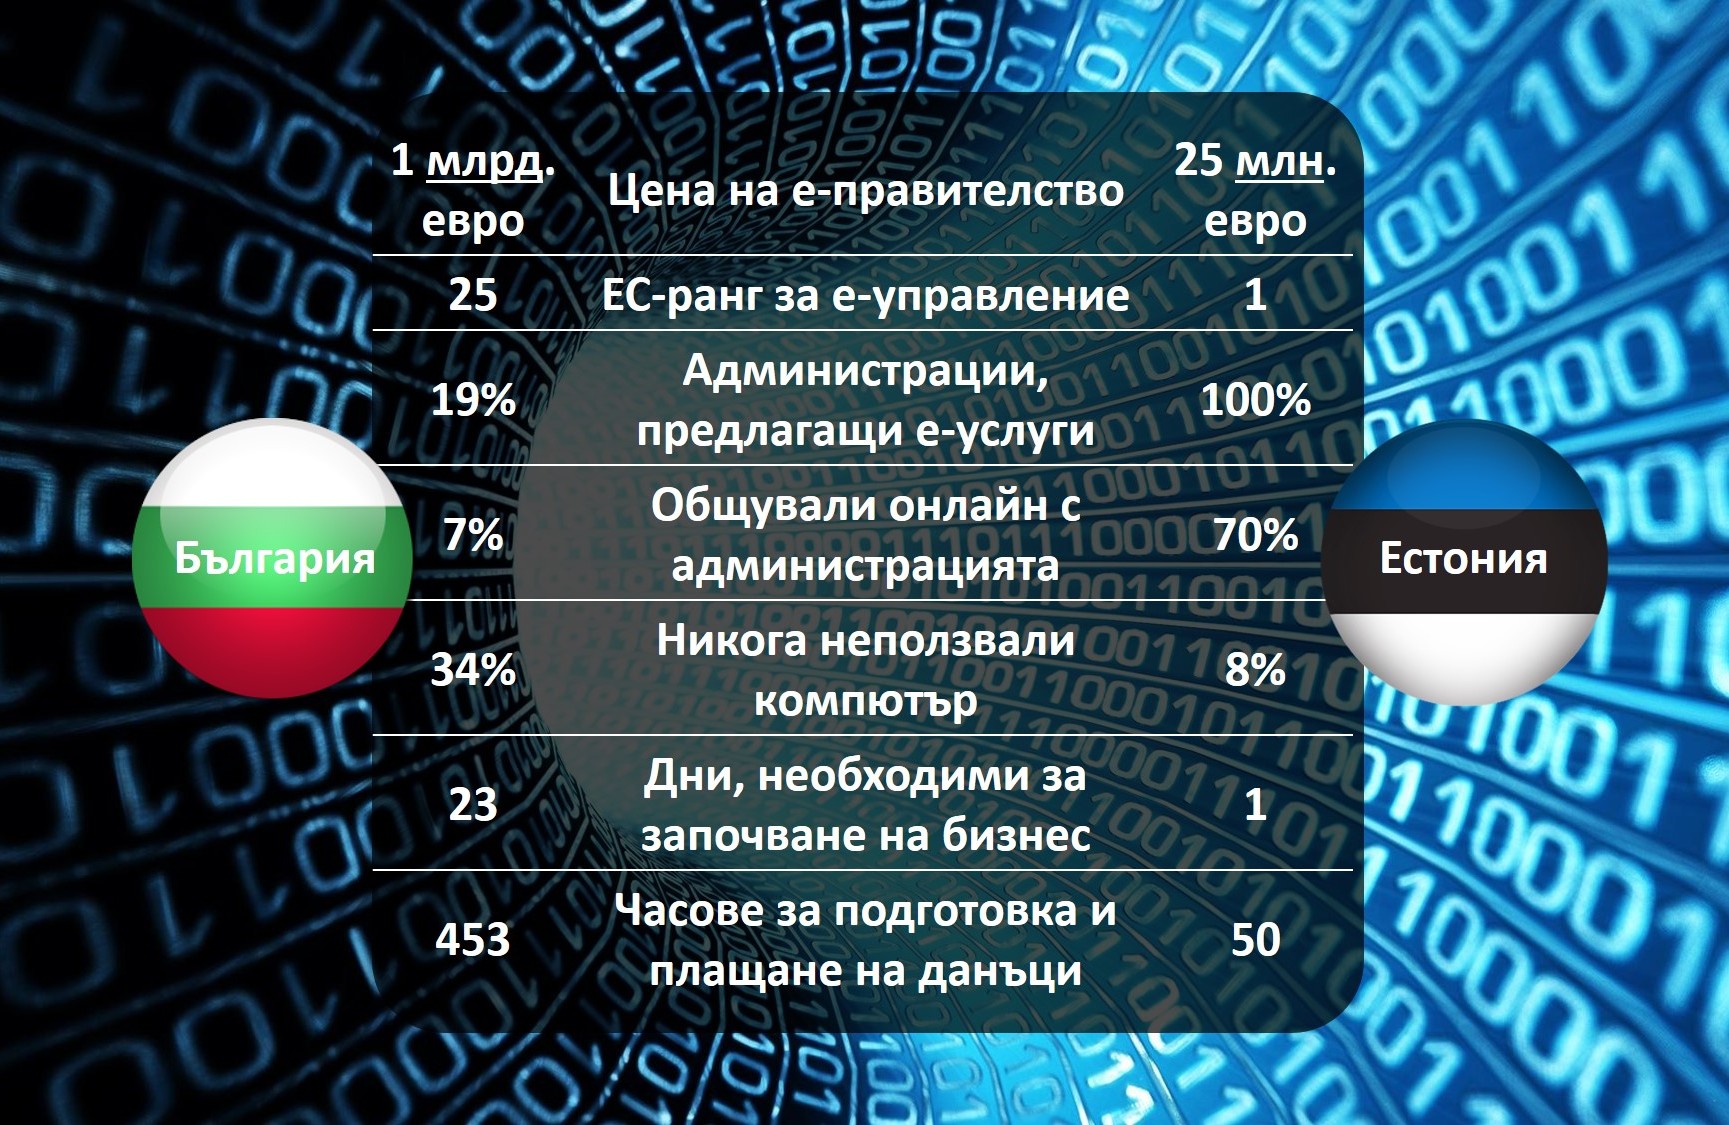 Electronic Government (Bulgaria - Estonia)